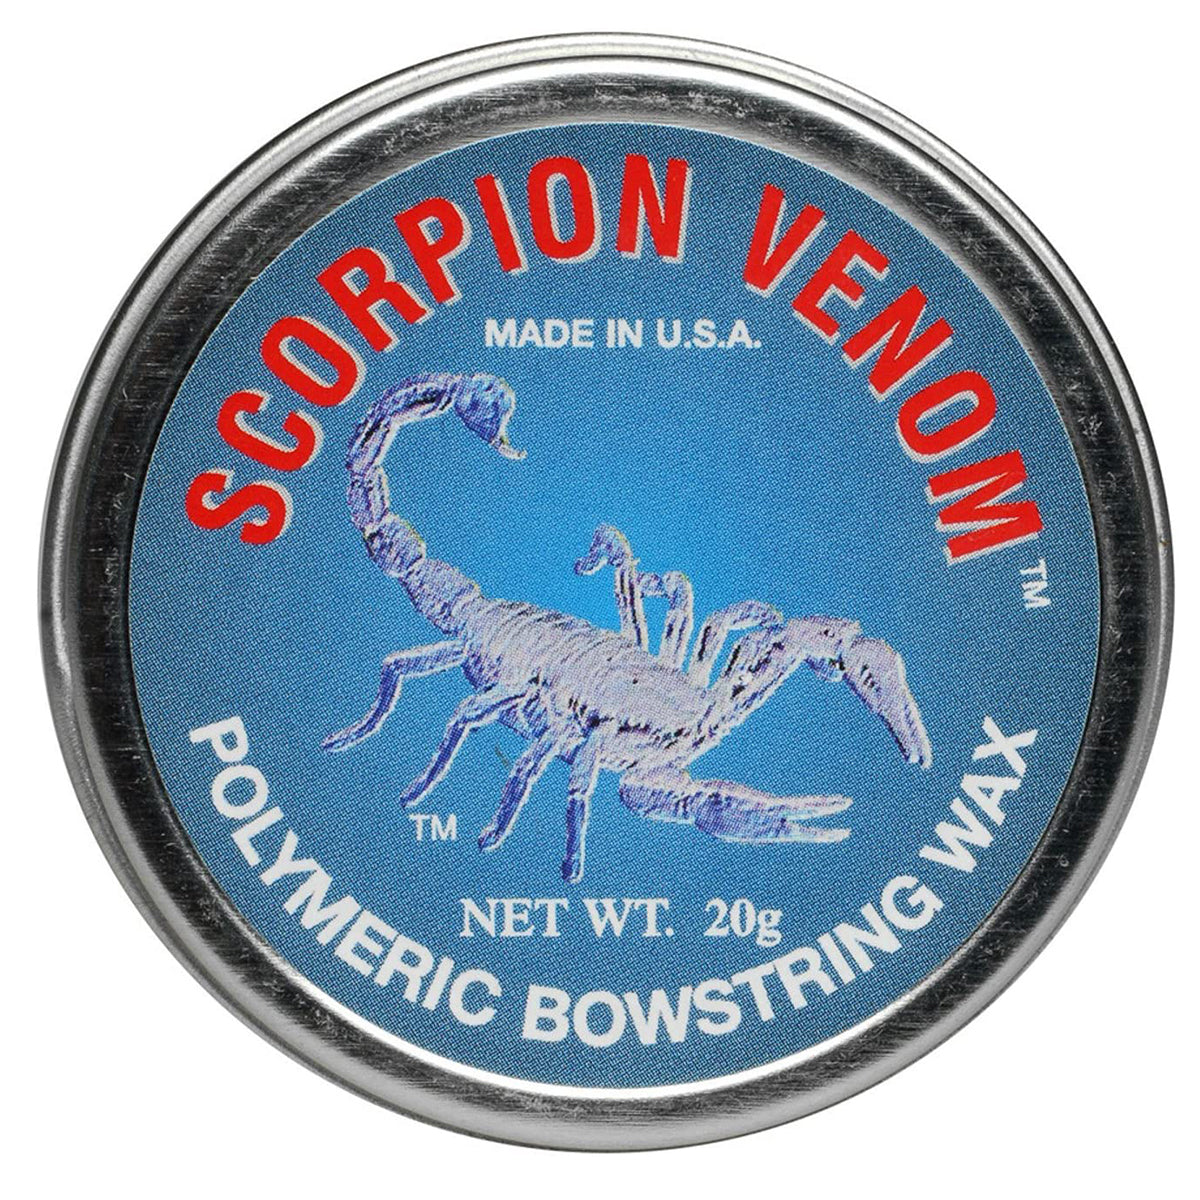 Scorpion Venom Polymeric Bowstring Wax in Scorpion Venom Polymeric Bowstring Wax by Scorpion Venom Archery | Archery - goHUNT Shop by GOHUNT | Scorpion Venom Archery - GOHUNT Shop